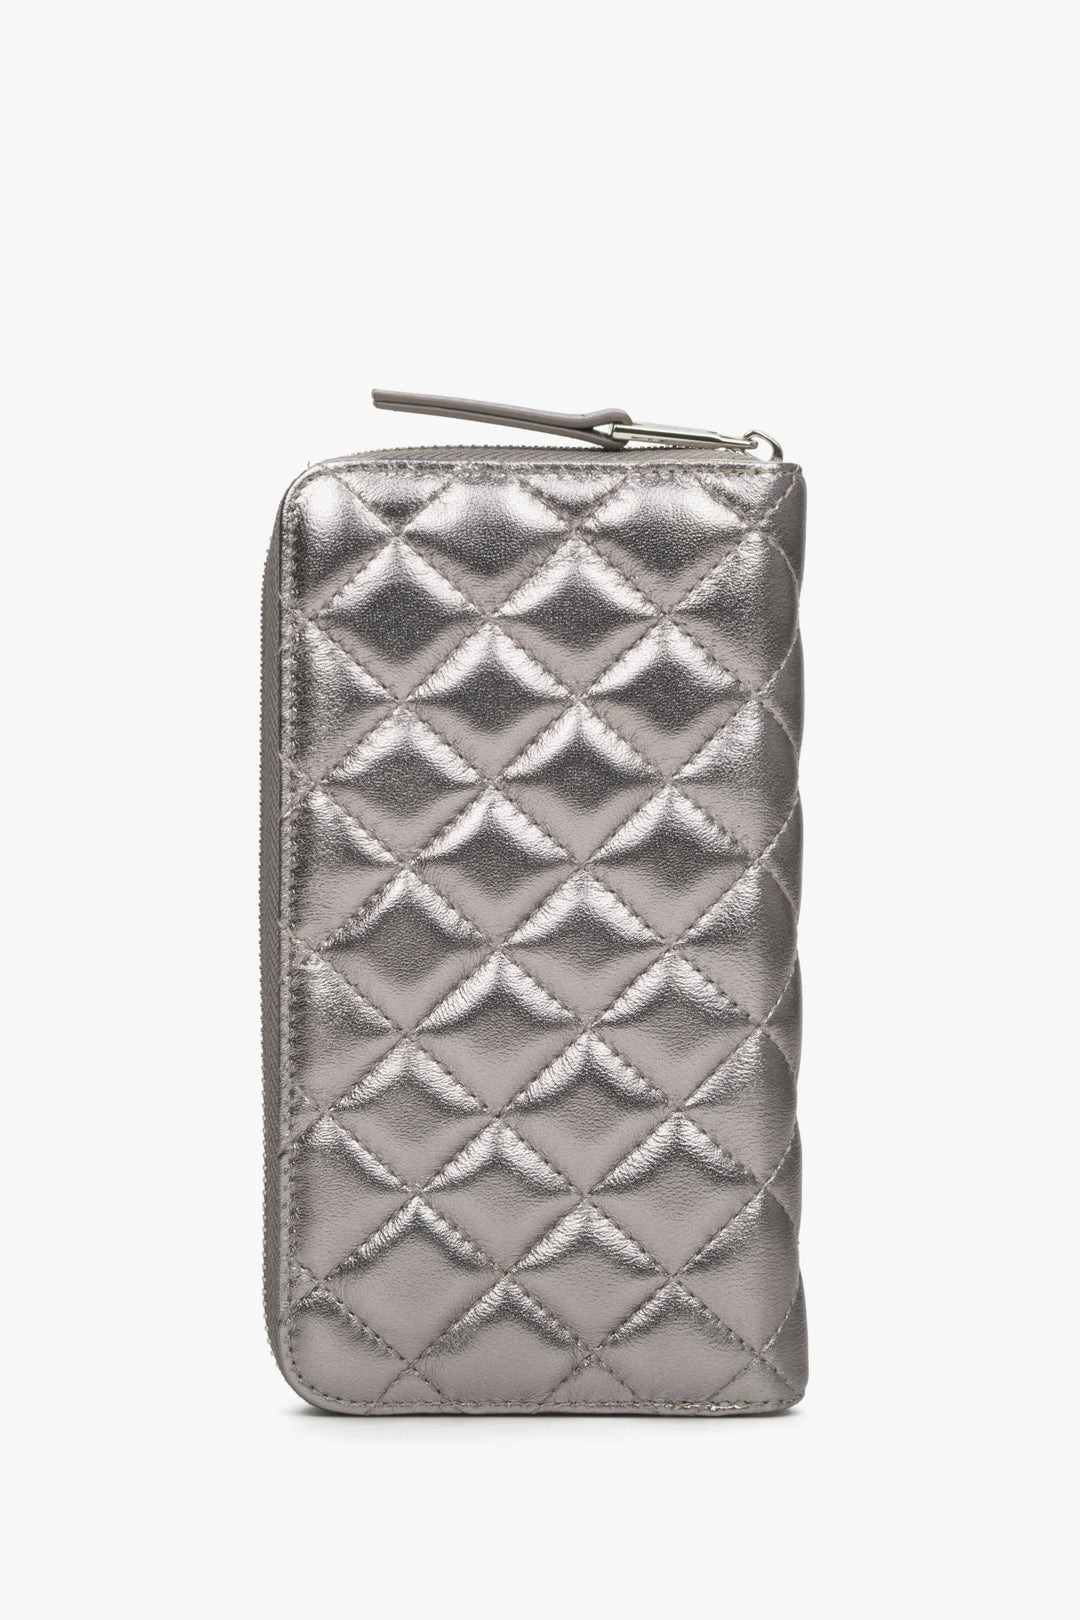 Estro women's large silver wallet.